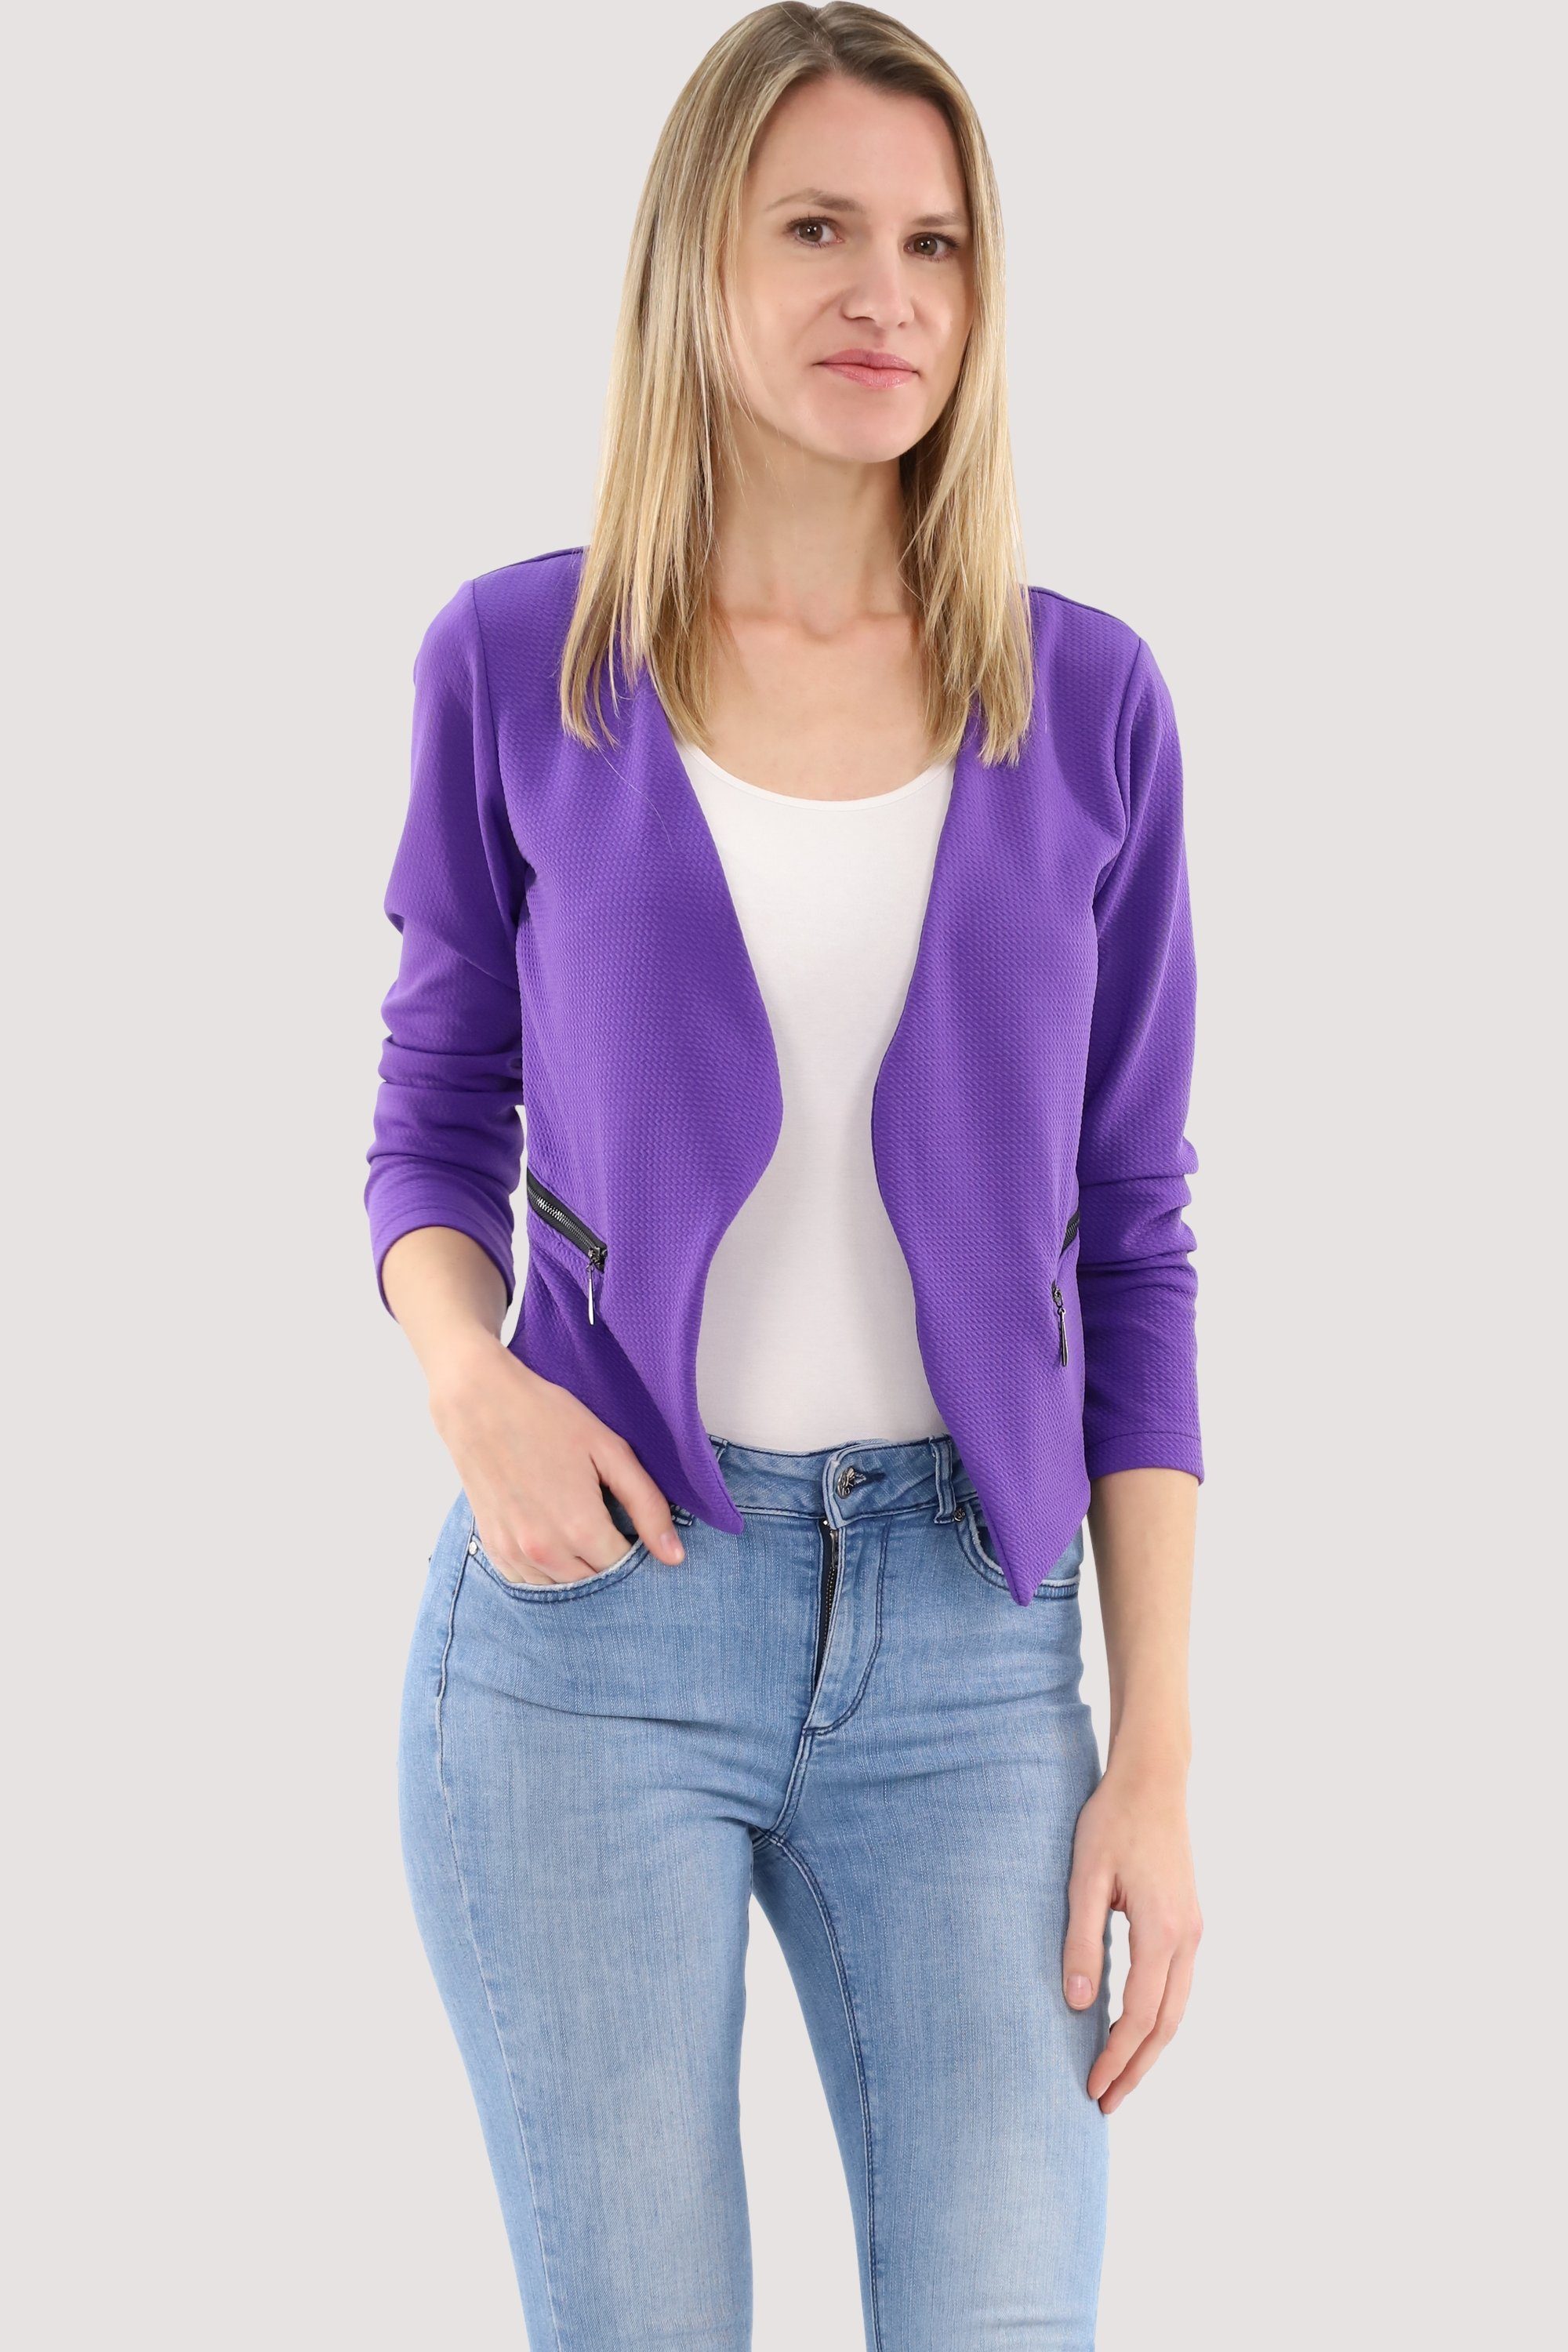 6040 im malito more Jackenblazer than Sweatblazer fashion violett Basic-Look